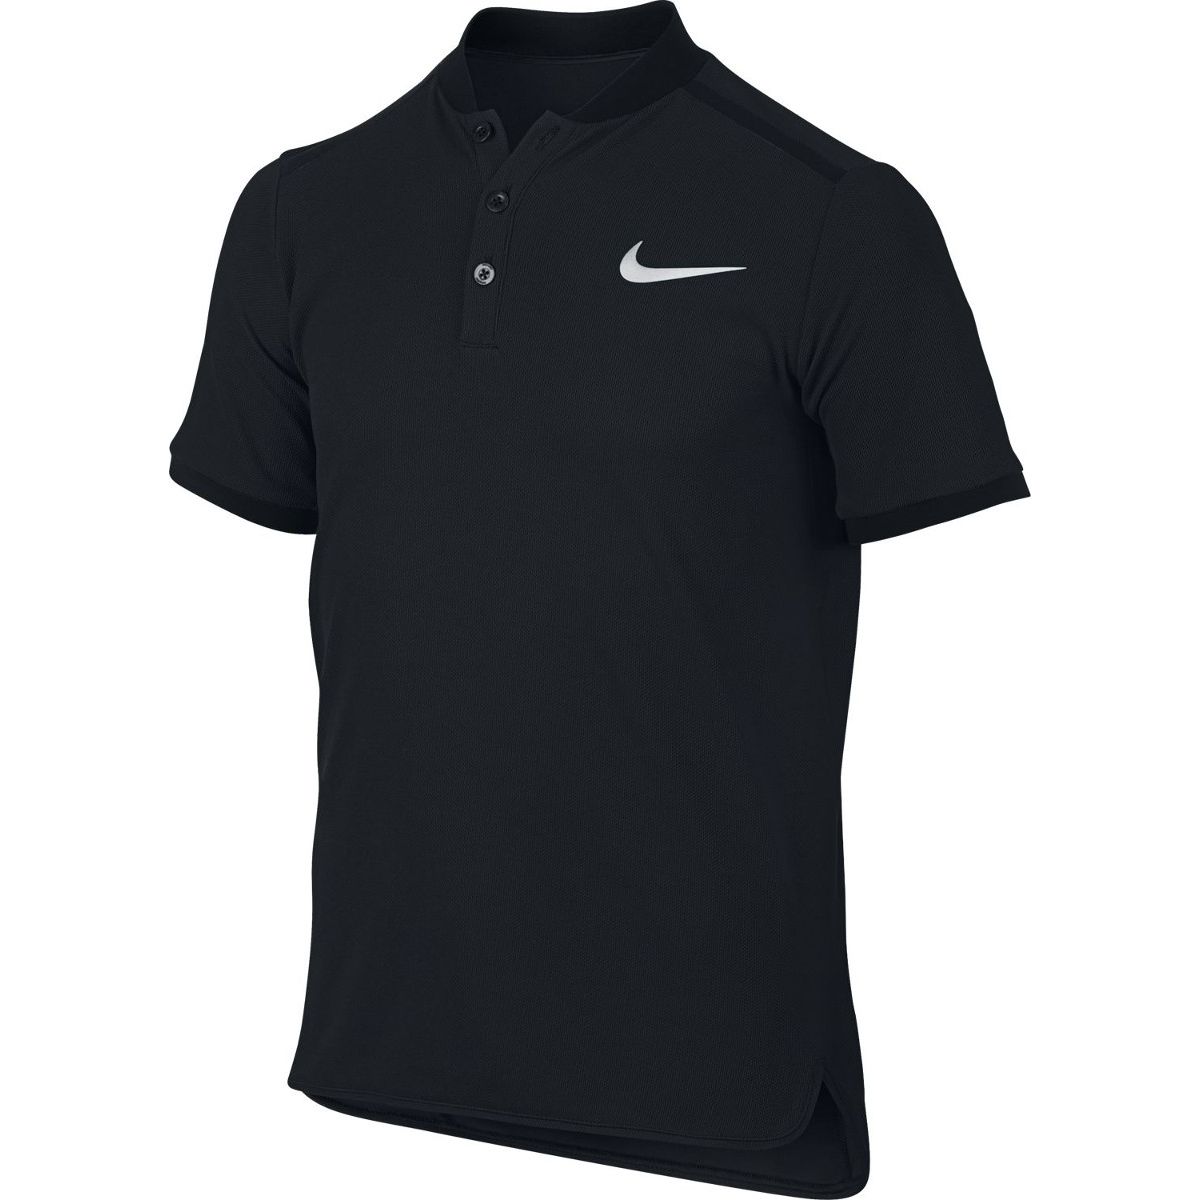 Nike Advantage Boys' Tennis Polo 832531-010